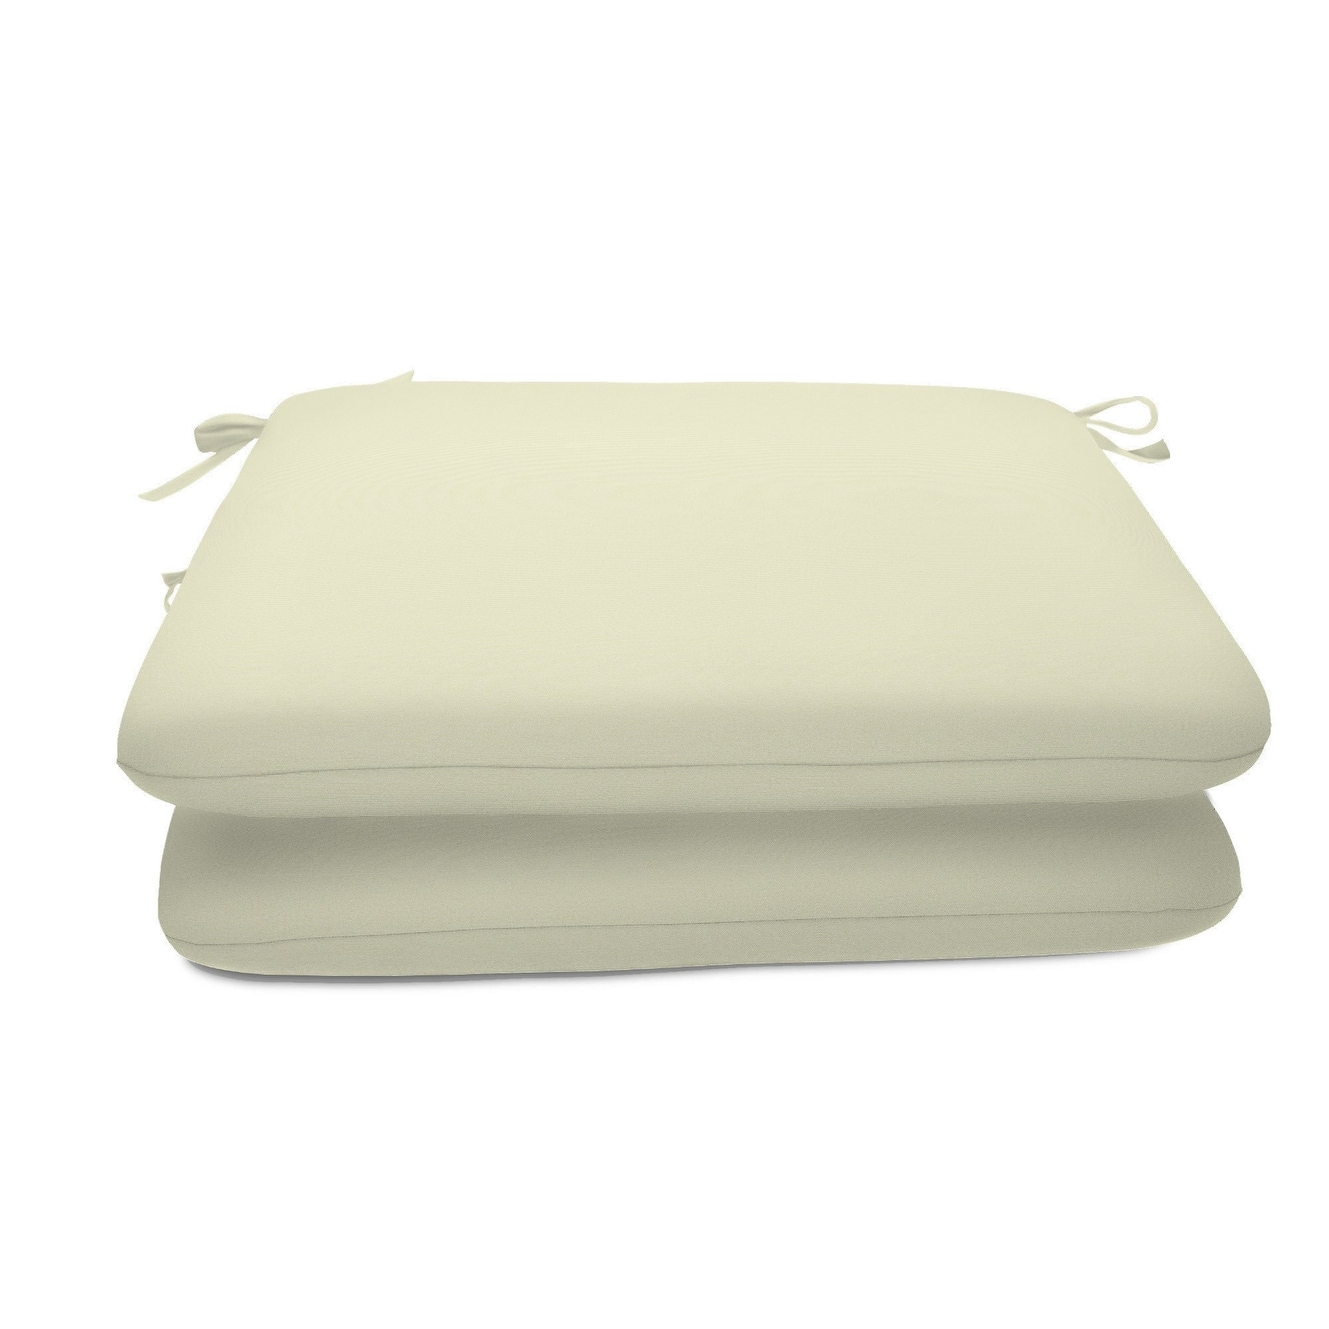 Sunbrella Spectrum Kiwi Solid Cushion For Universal 18"x 24"x 5" 2 Pack 